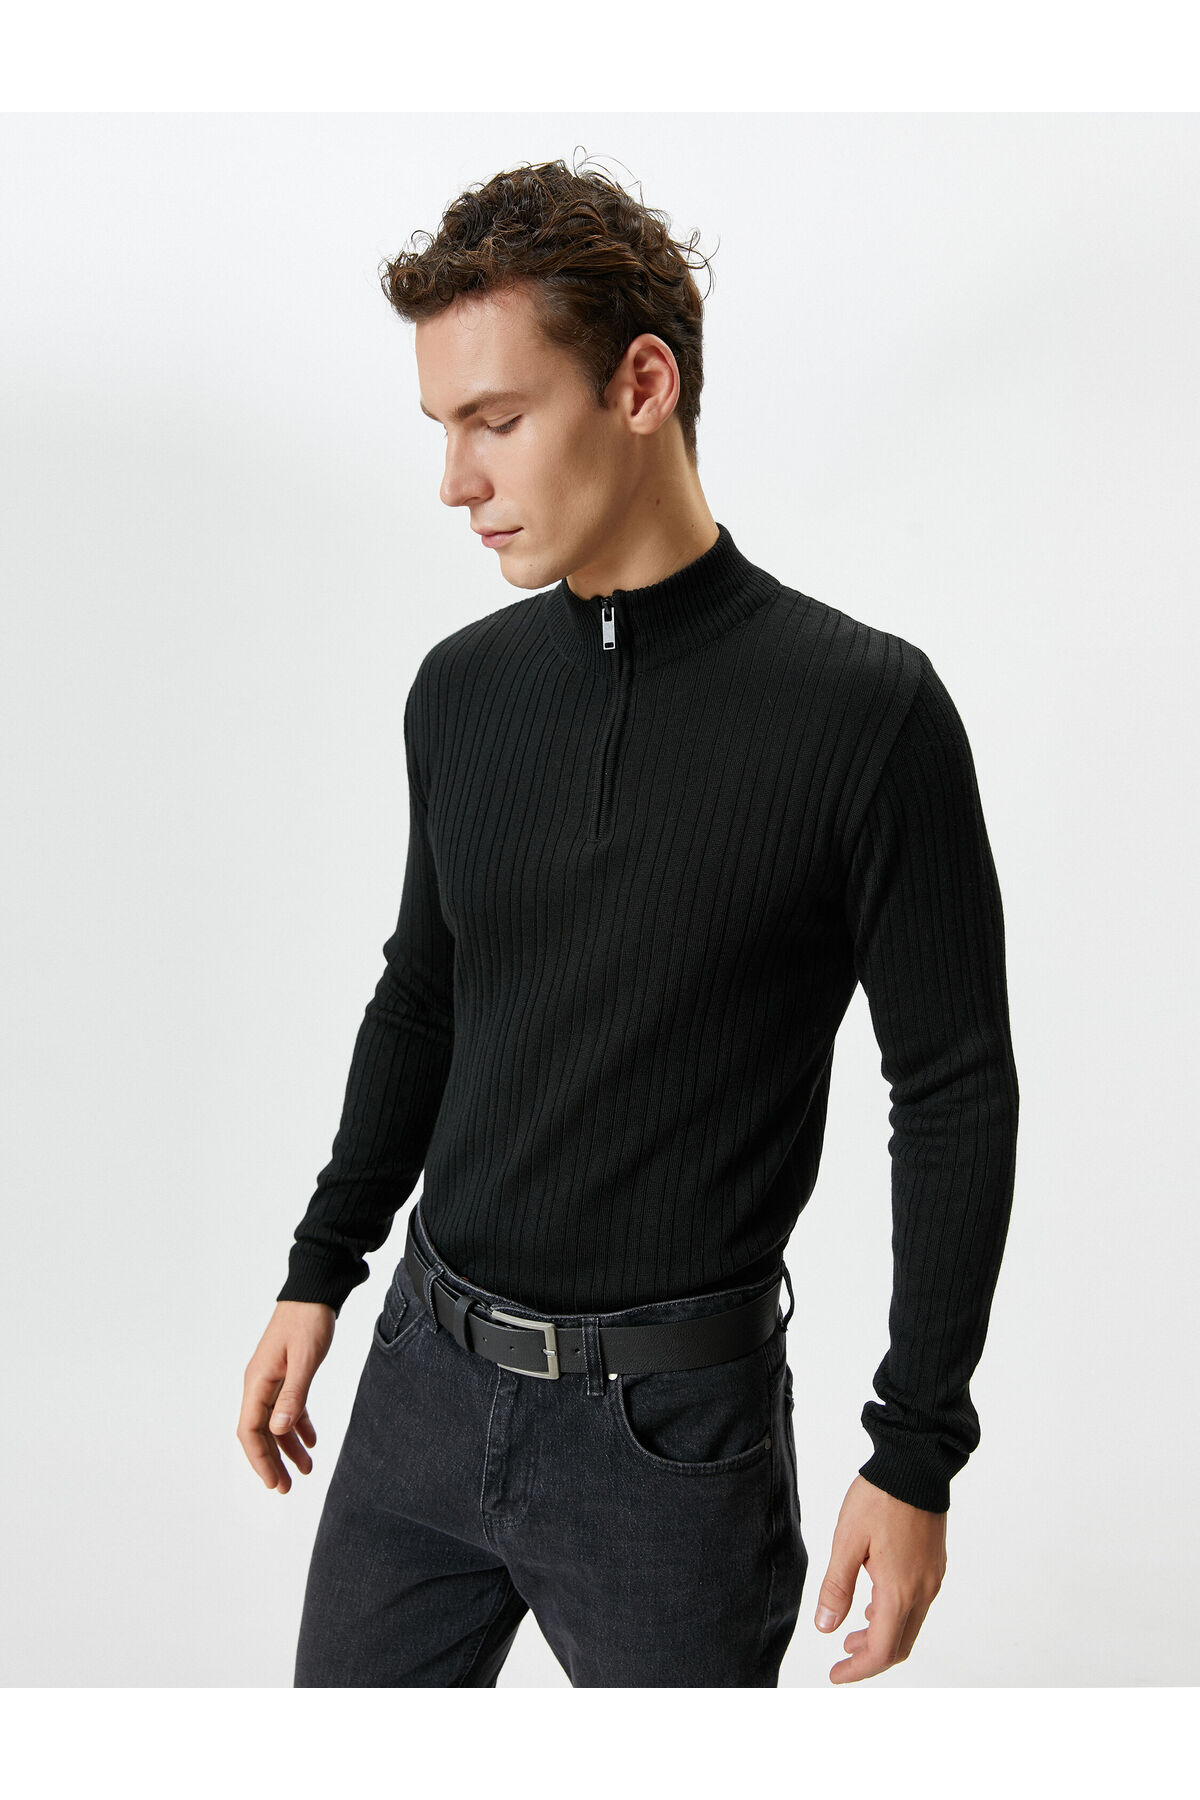 Koton Half-Zip Sweater High Neck Textured Long Sleeve